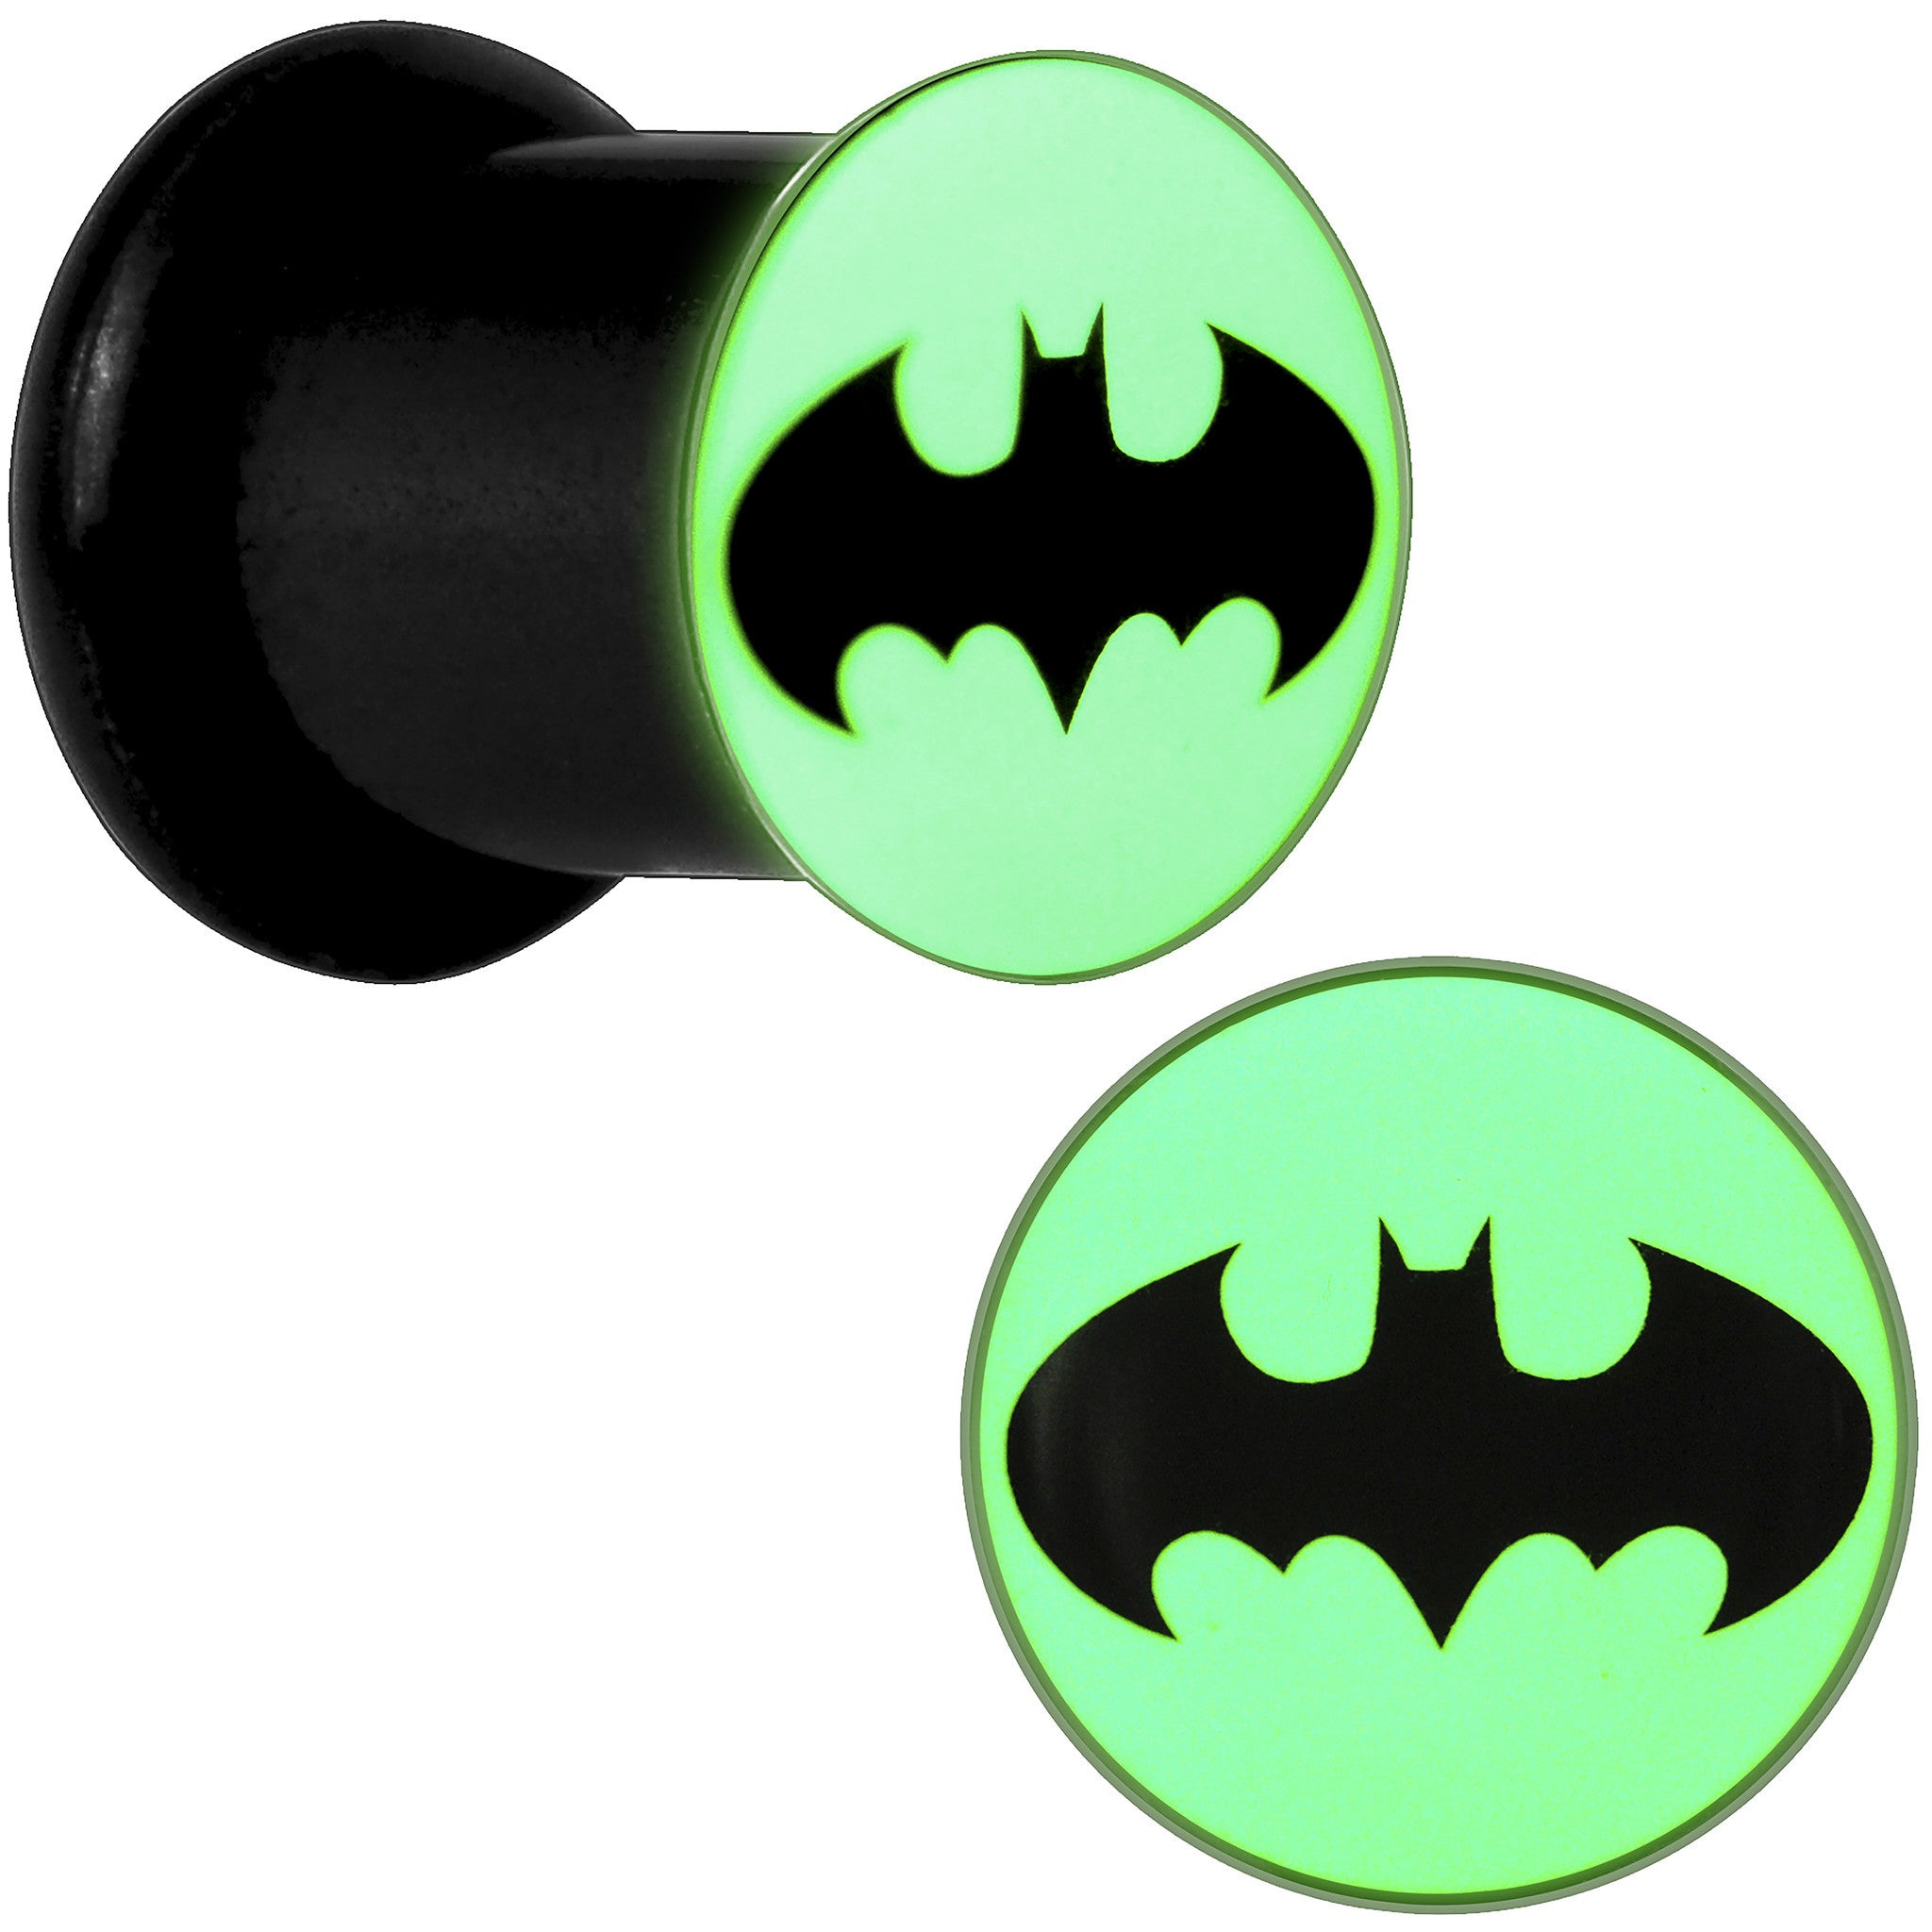 0 Gauge Black Acrylic Glow in the Dark Batman Plug Set